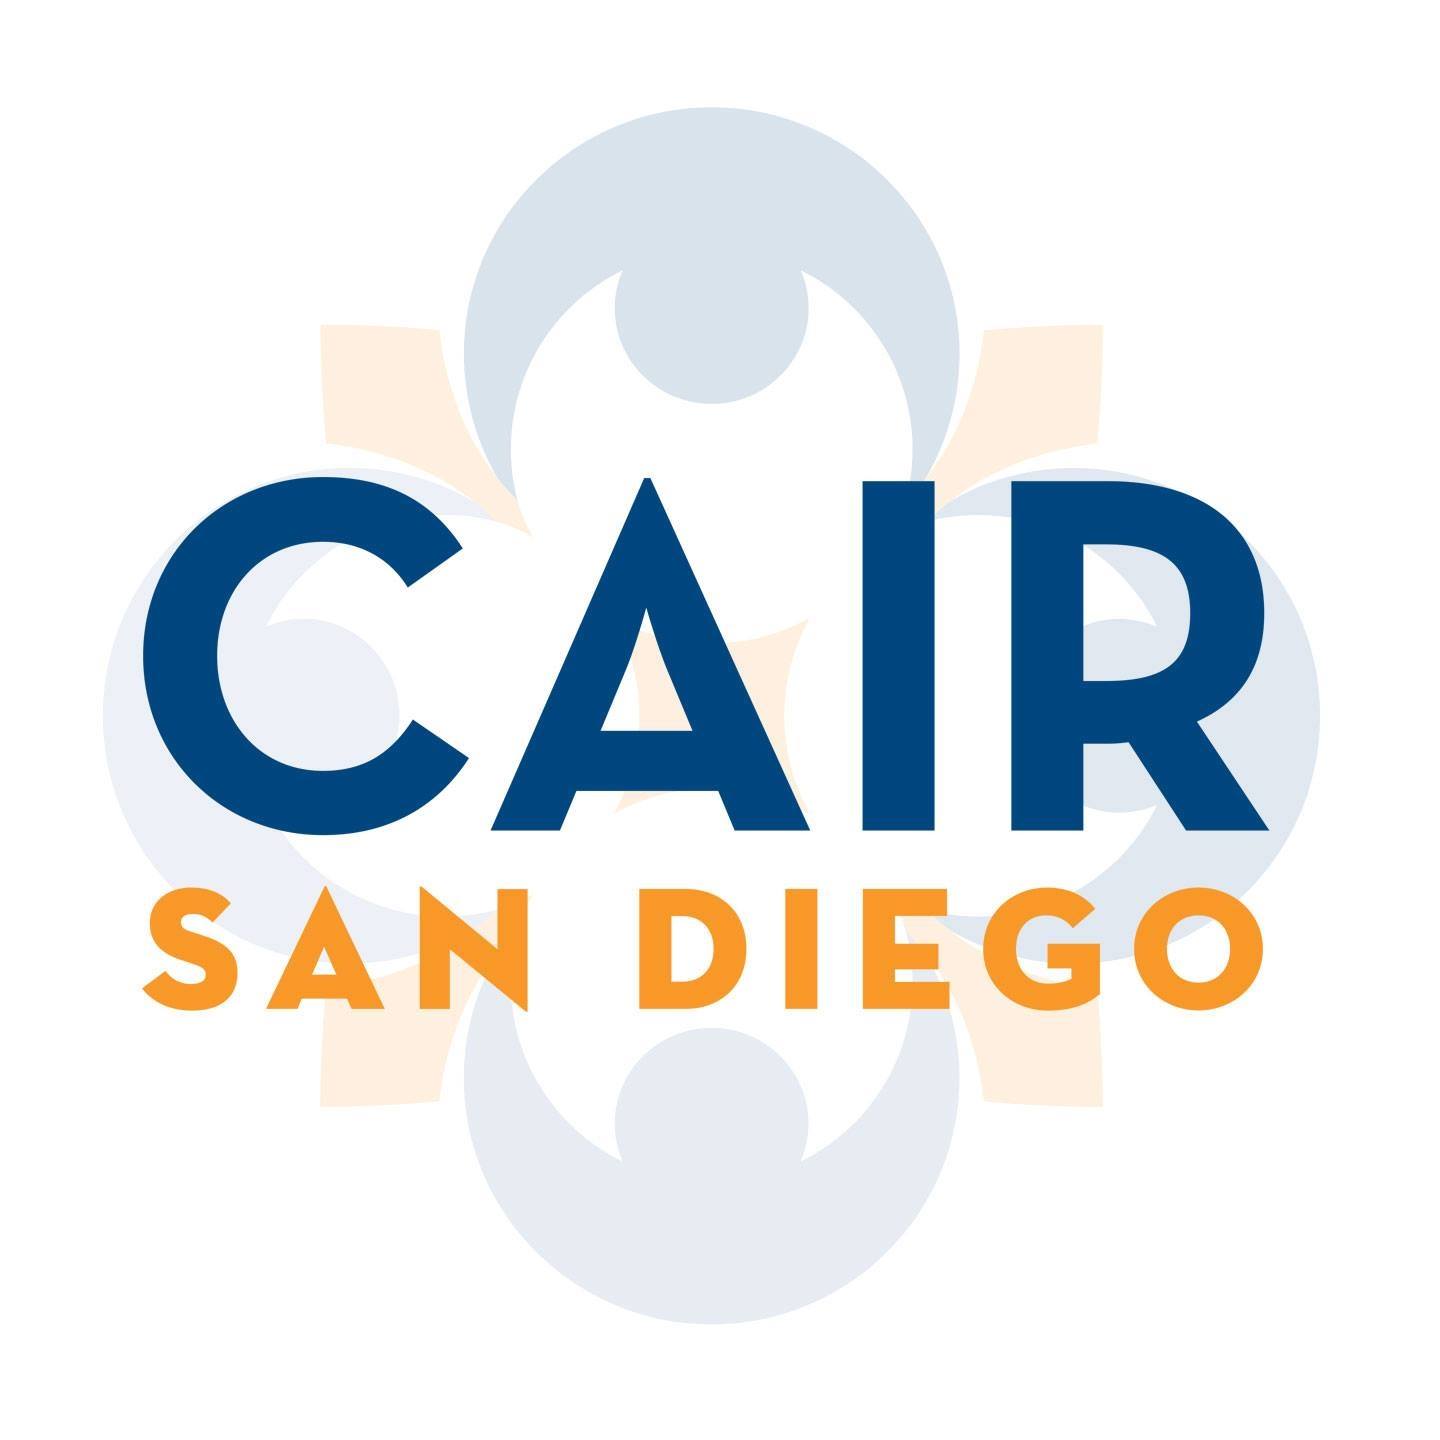 Muslim Organizations in Los Angeles California - Council on American-Islamic Relations California San Diego